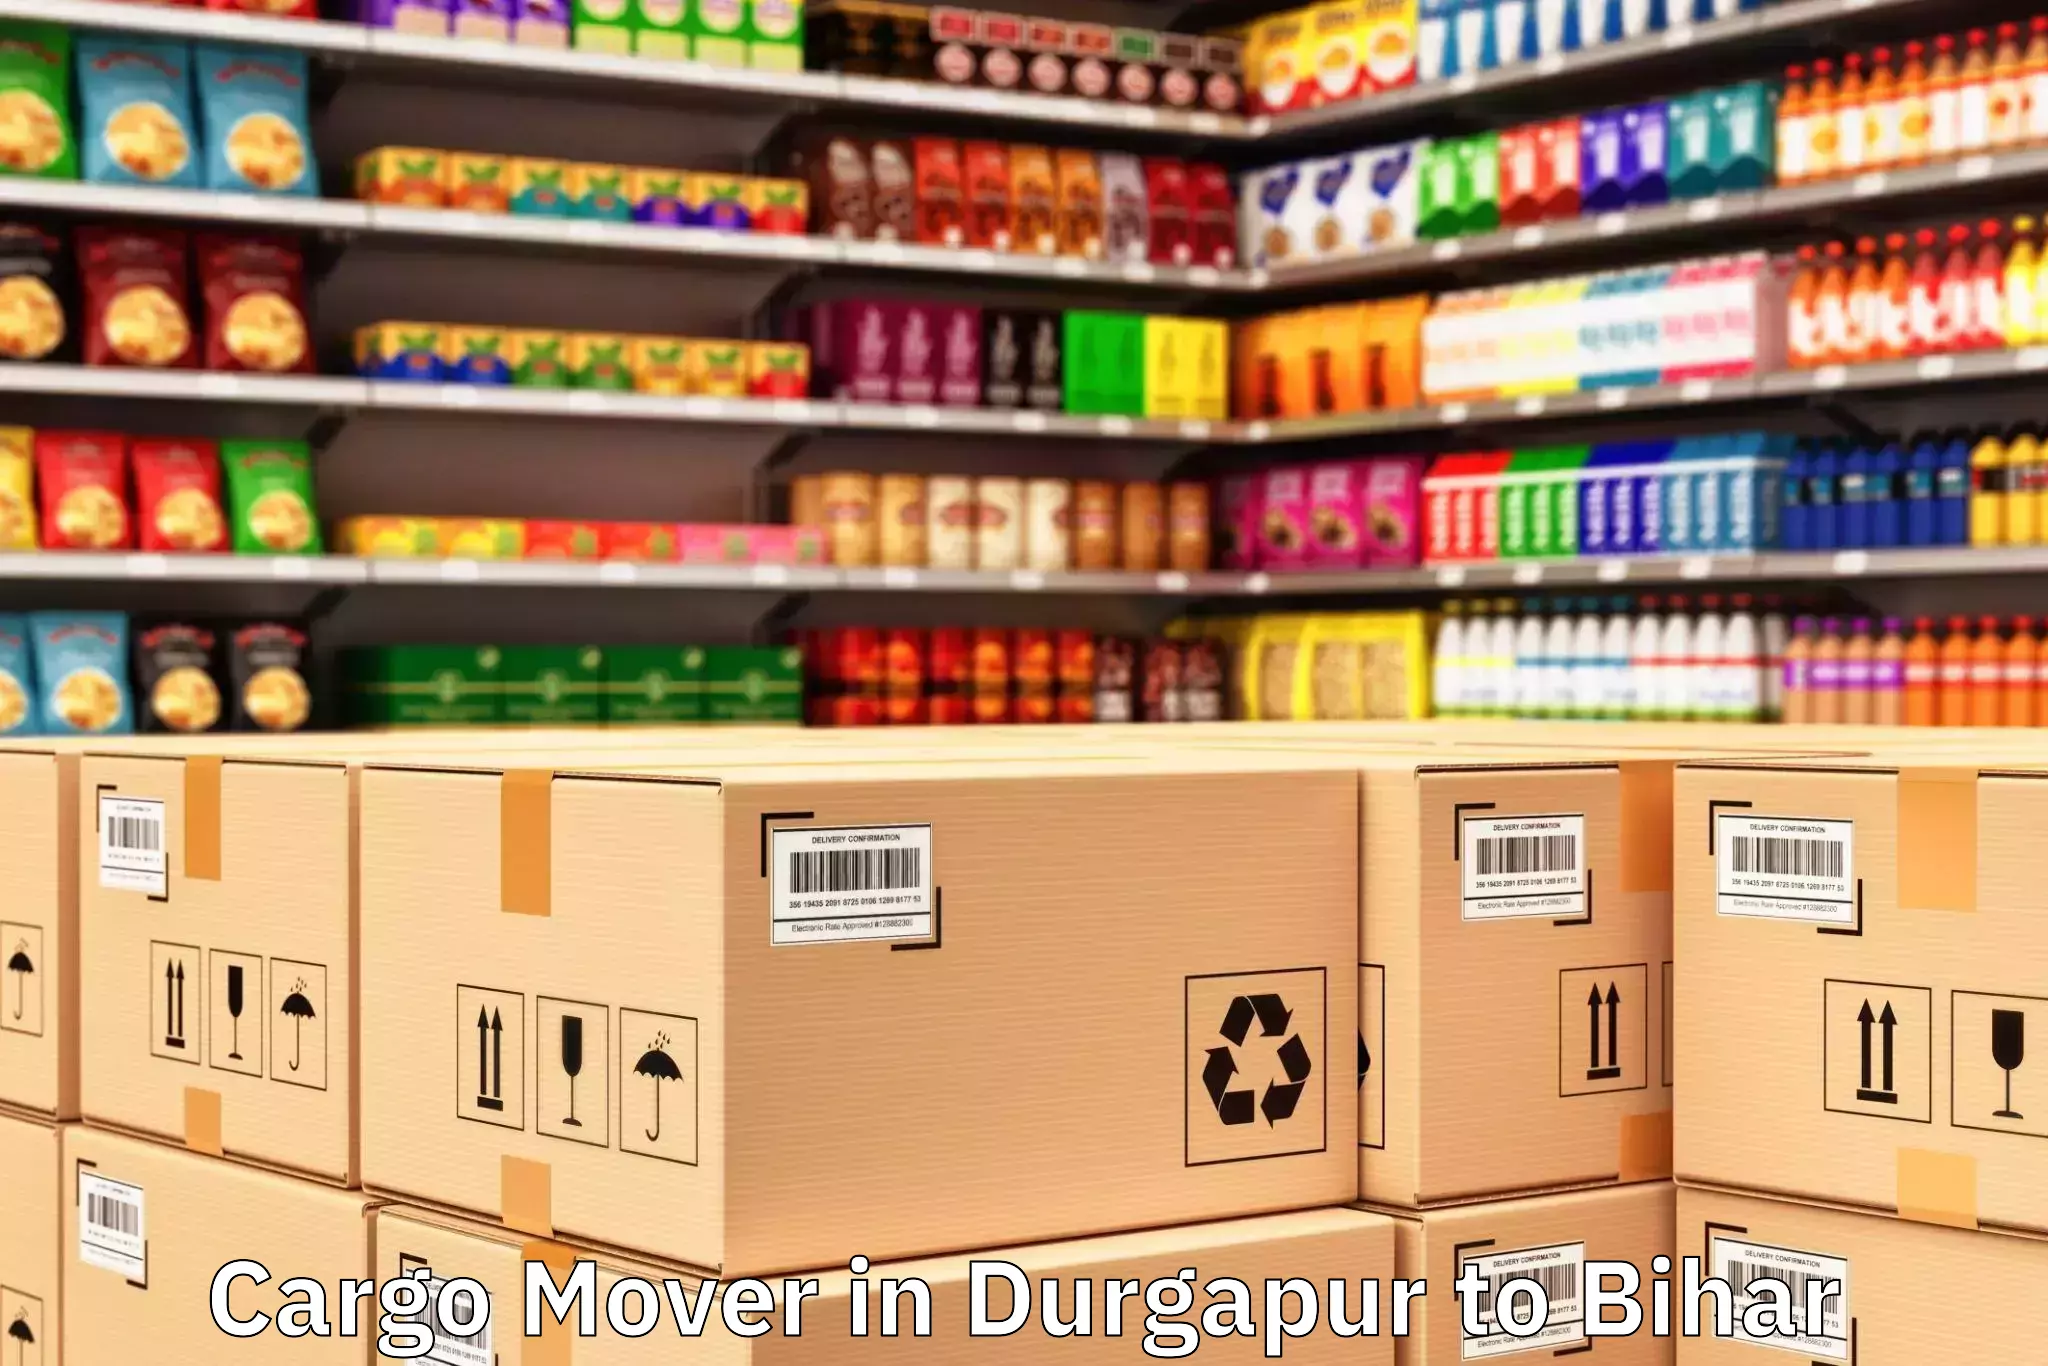 Efficient Durgapur to Runni Saidpur Madhya Cargo Mover